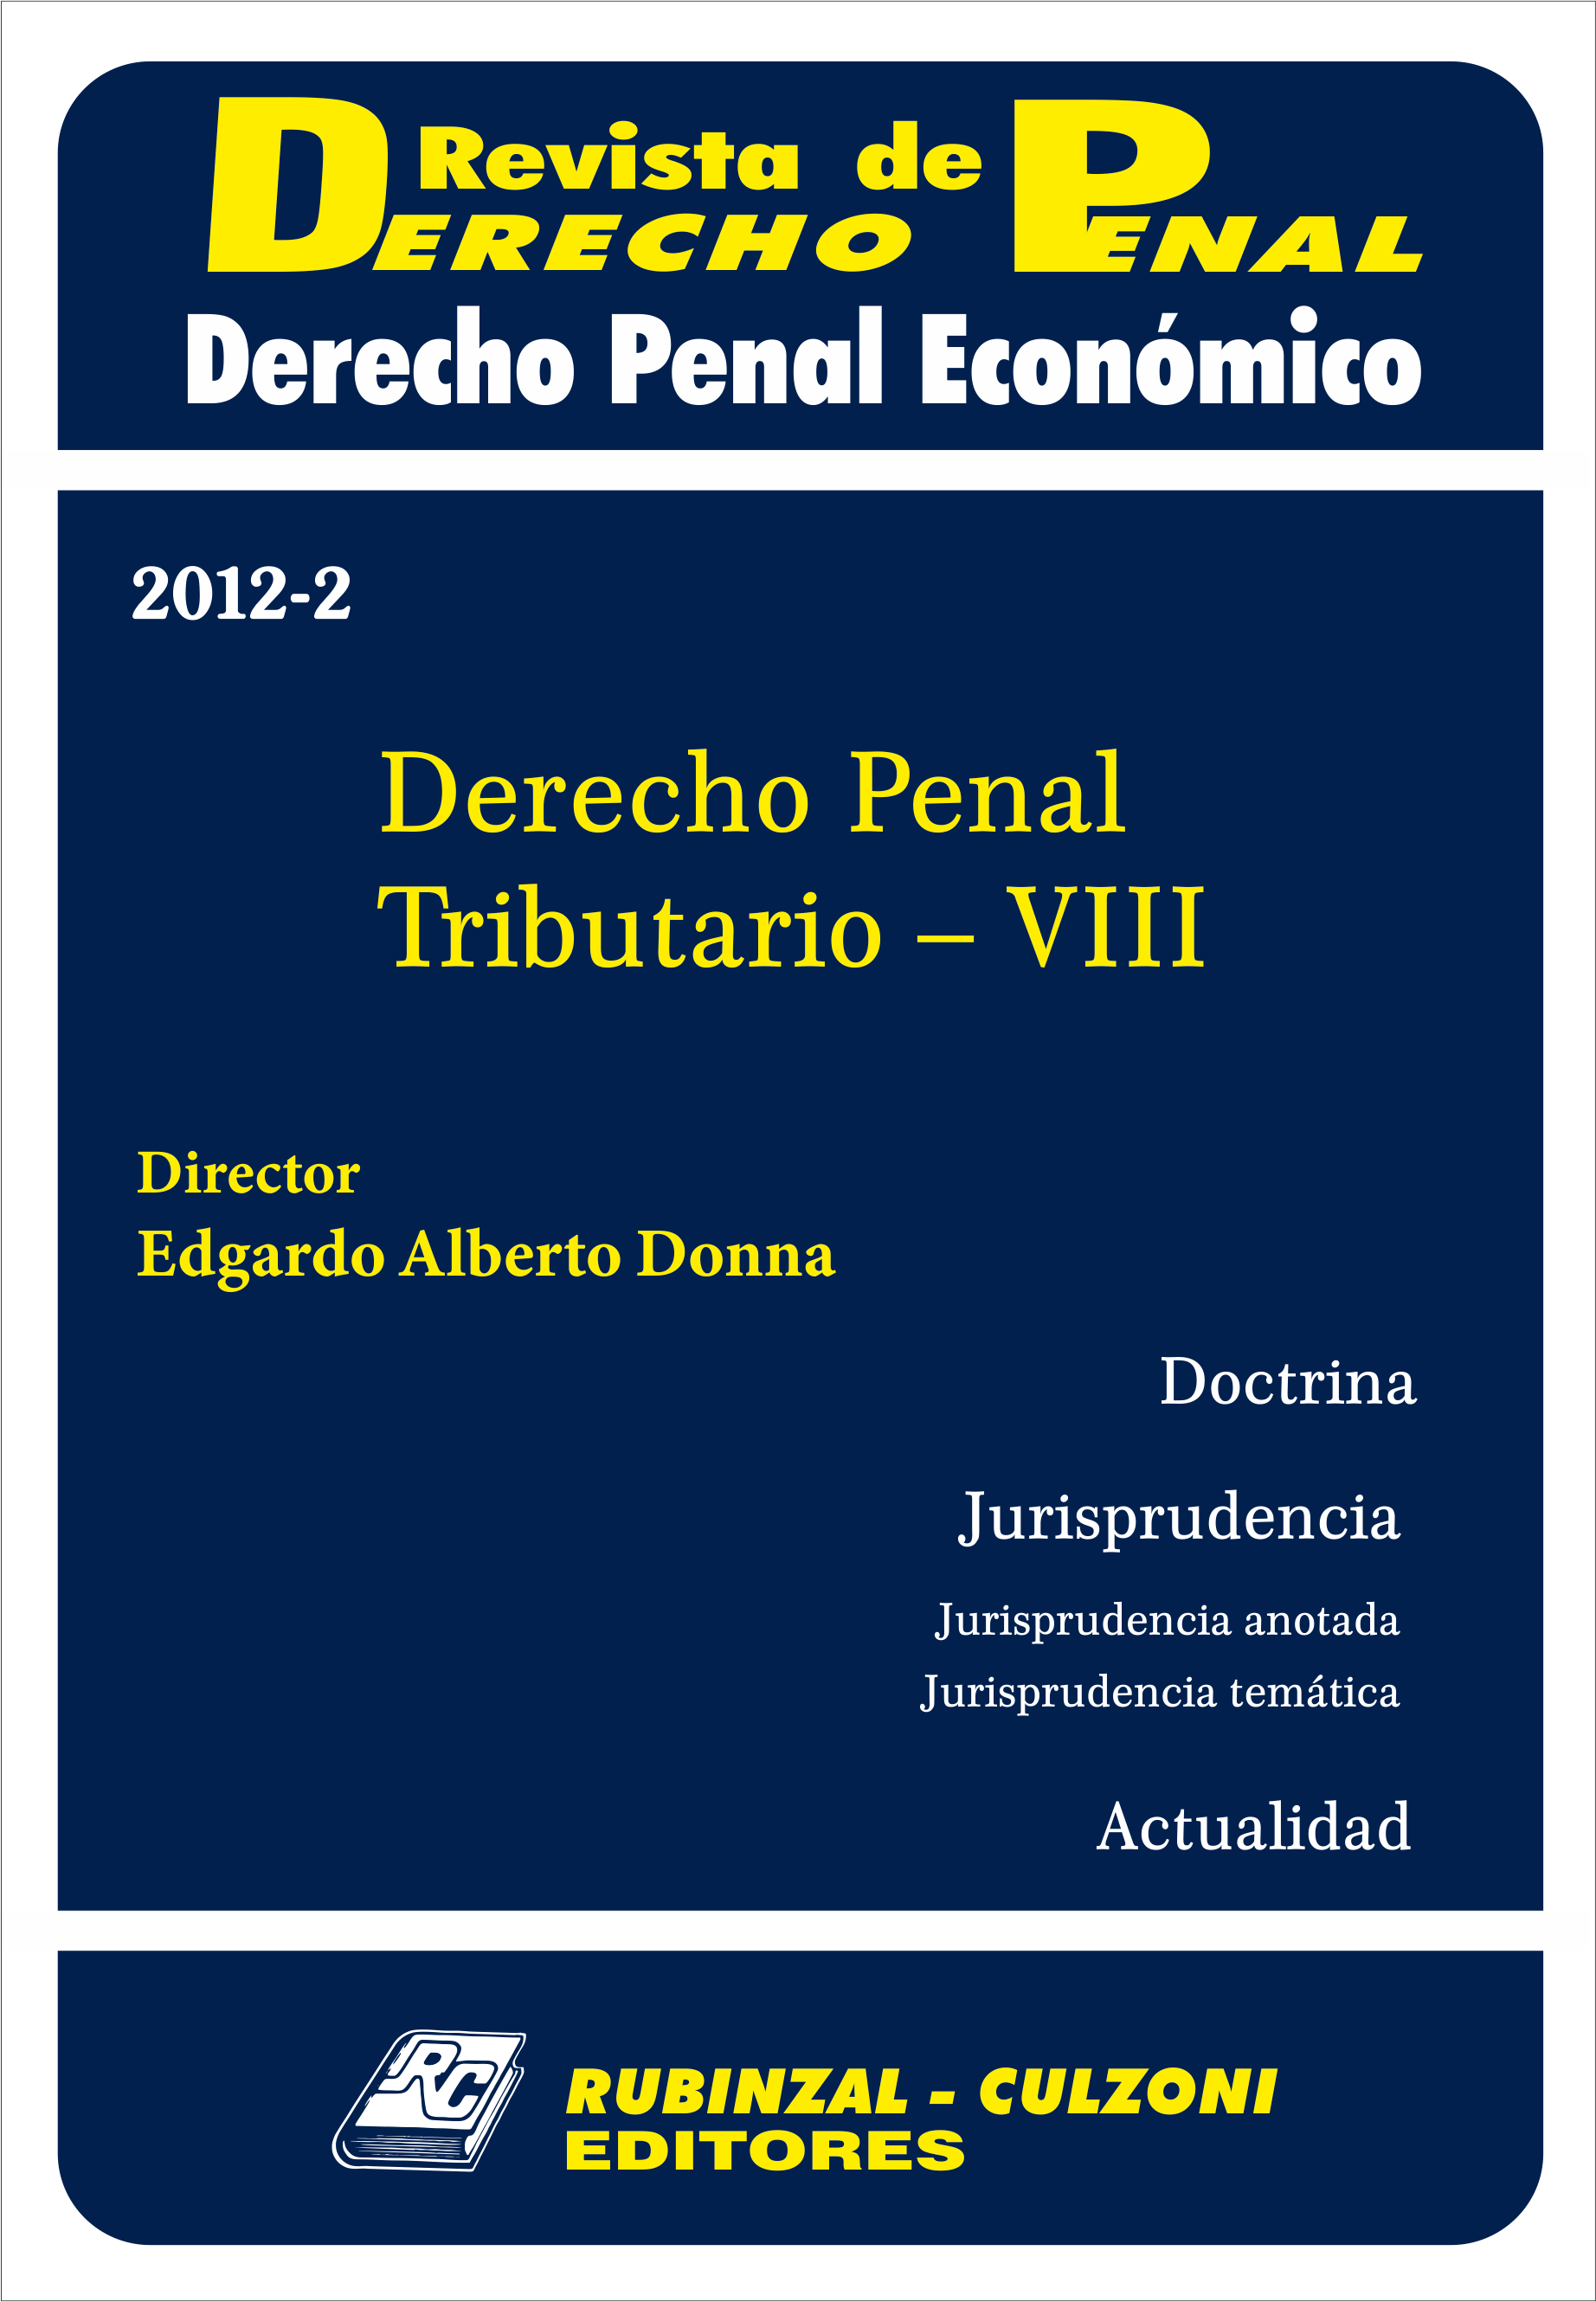 Derecho Penal Tributario - VIII. [2012-2]